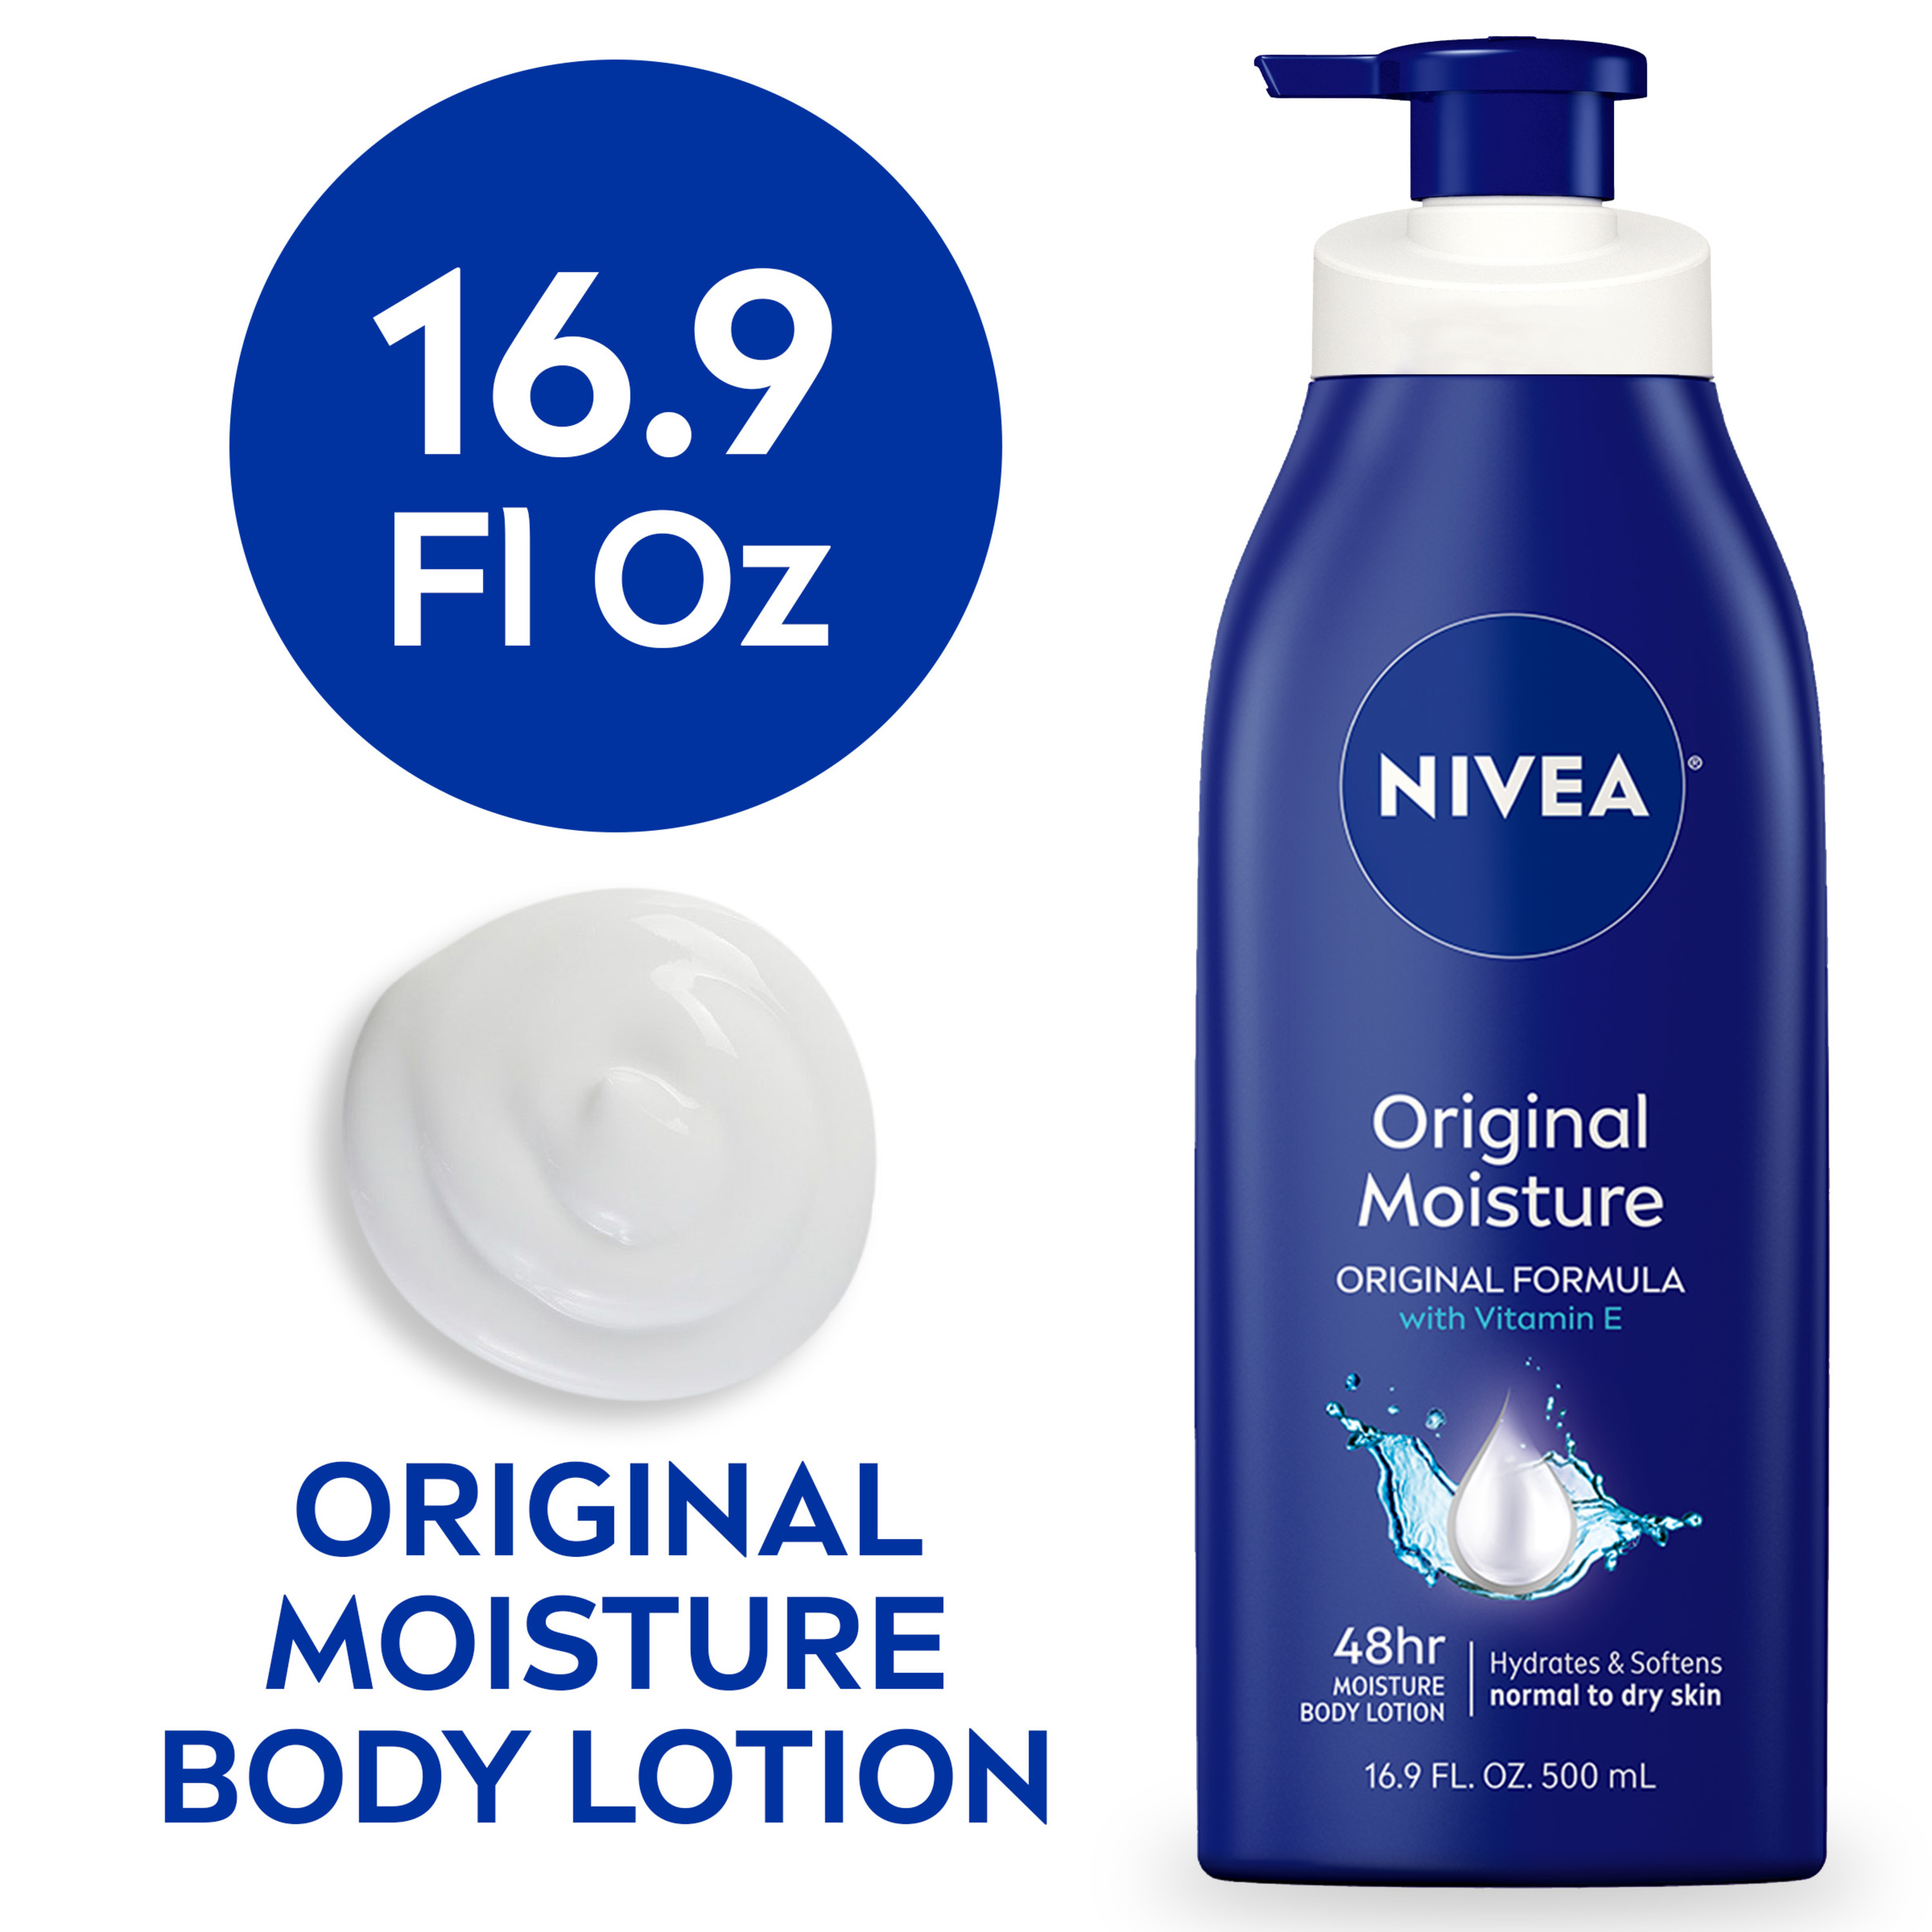 NIVEA Original Moisture Body Lotion with Vitamin E, 16.9 Fl Oz Pump Bottle - image 1 of 11